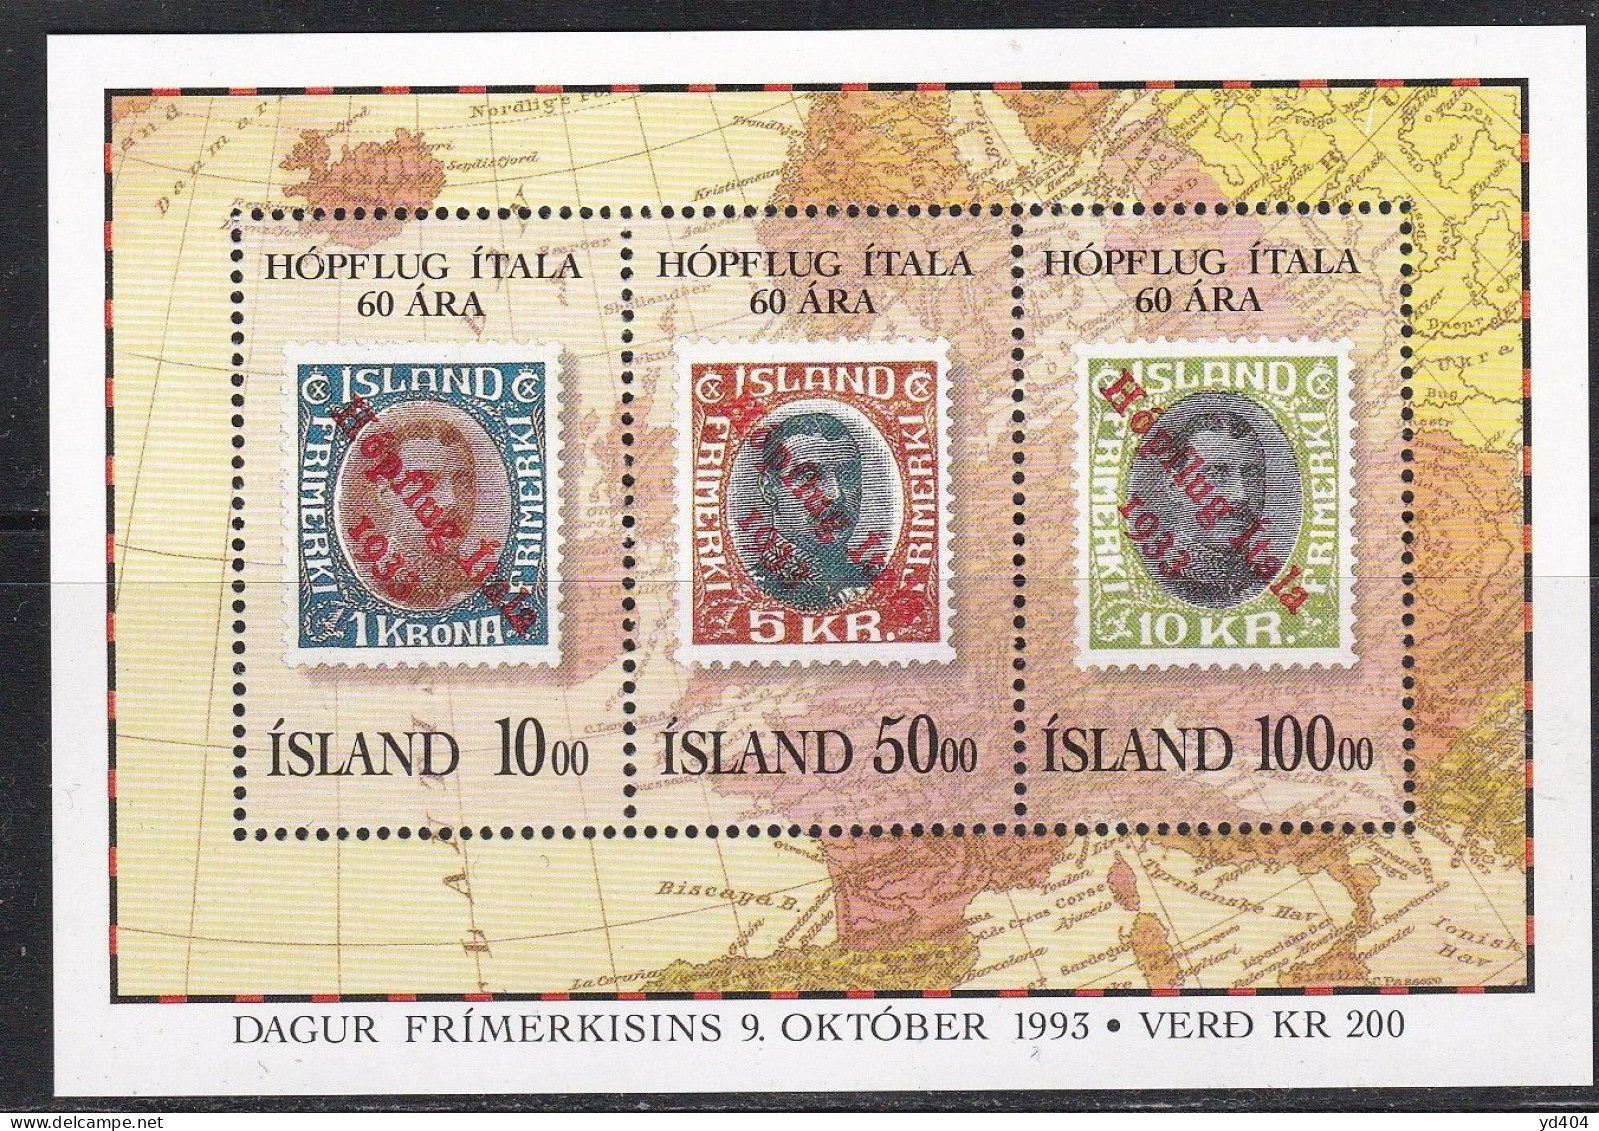 IS482 – ISLANDE – ICELAND – 1993 – JOURNEE DU TIMBRE – SG # MS 810 MNH 12,25 € - Blocs-feuillets